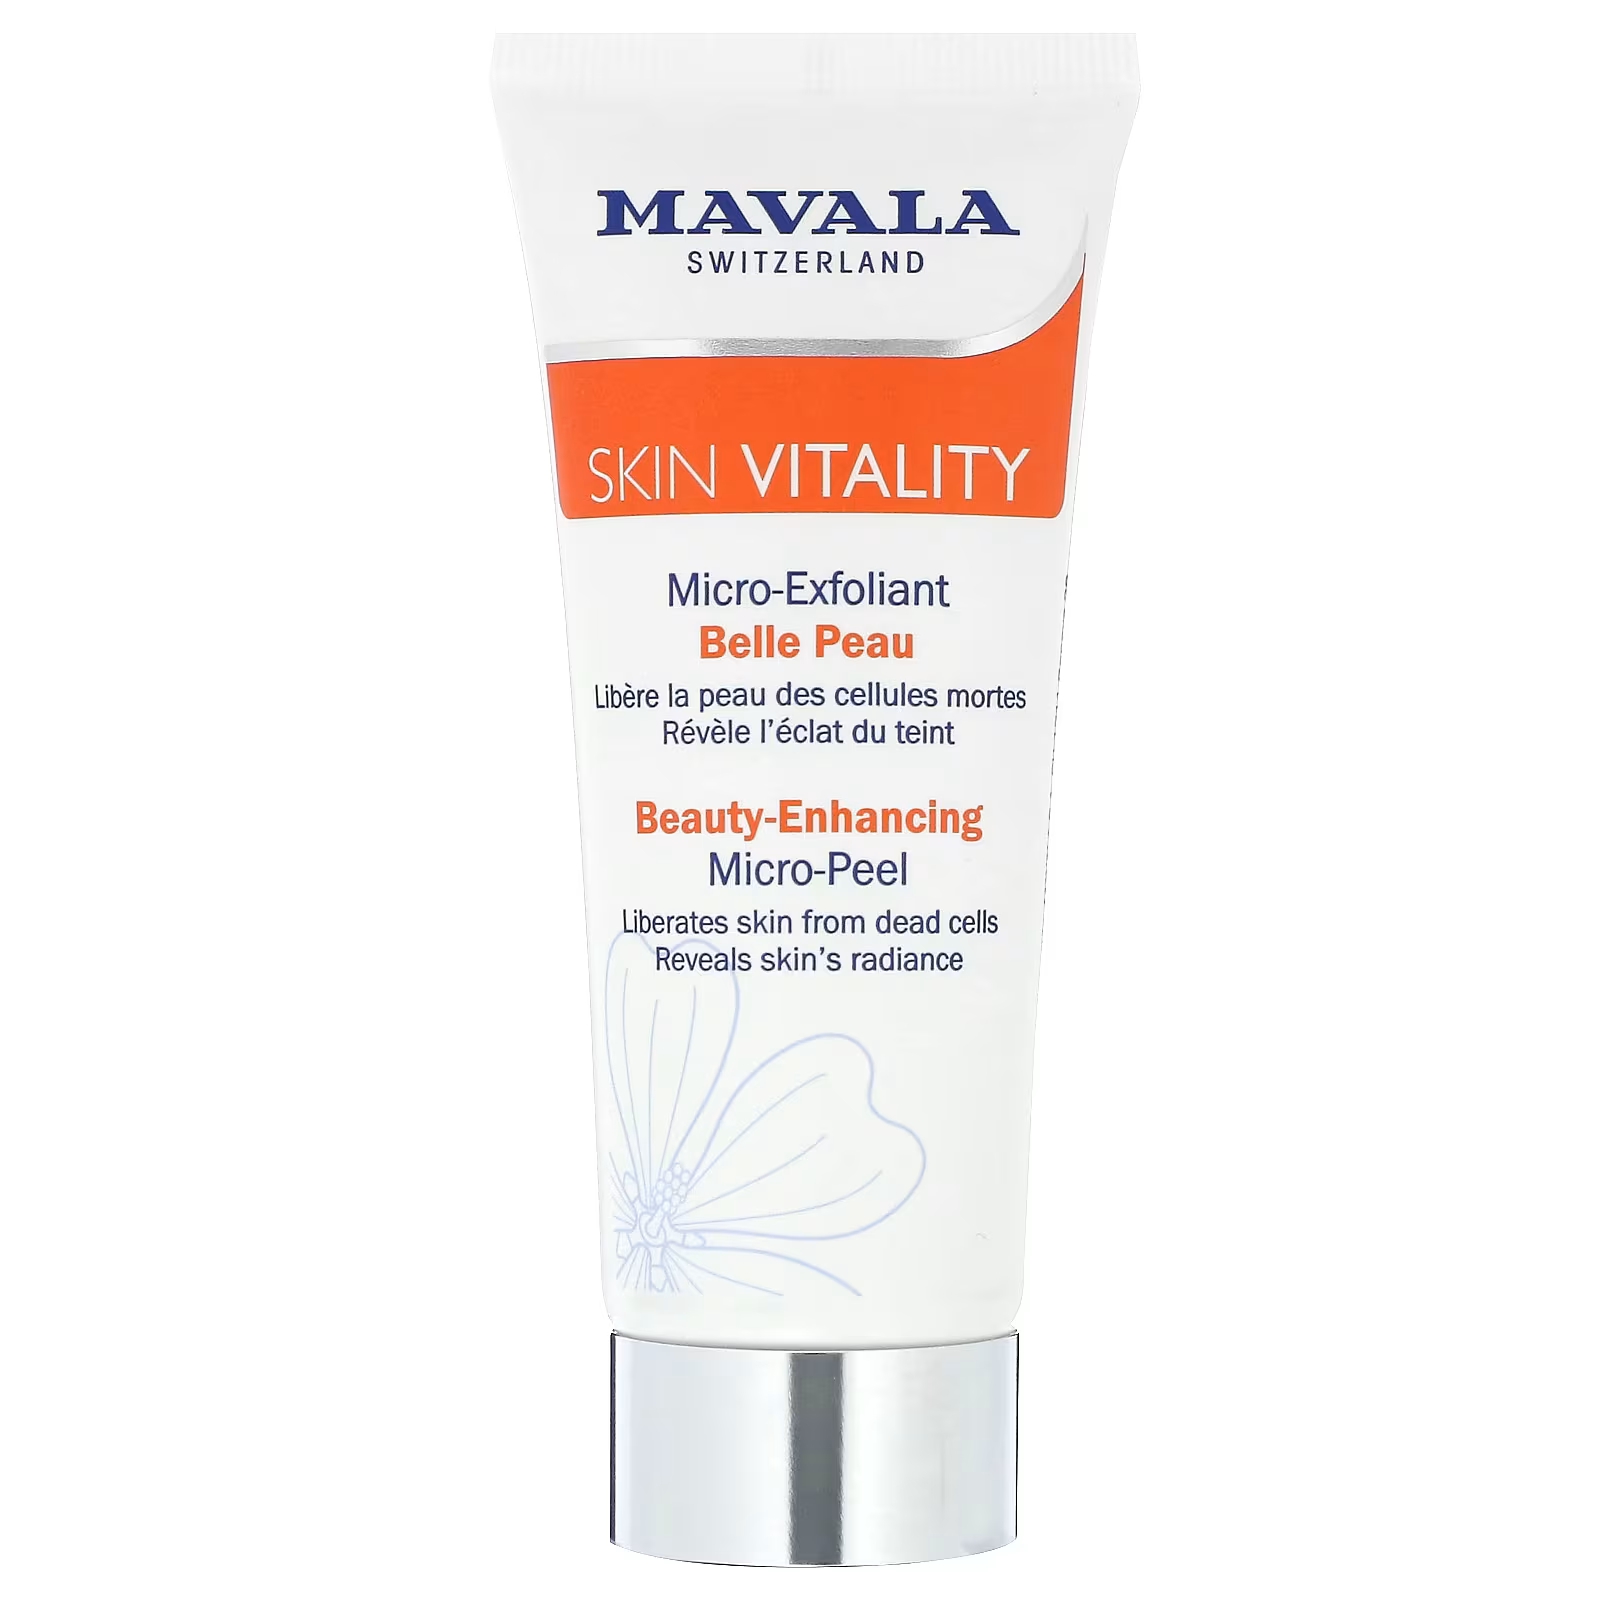 Микро-скраб Mavala Skin Vitality Beauty-Enhancing Micro-Peel, 65 мл mavala switzerland skin vitality vitalizing alpine micro mist